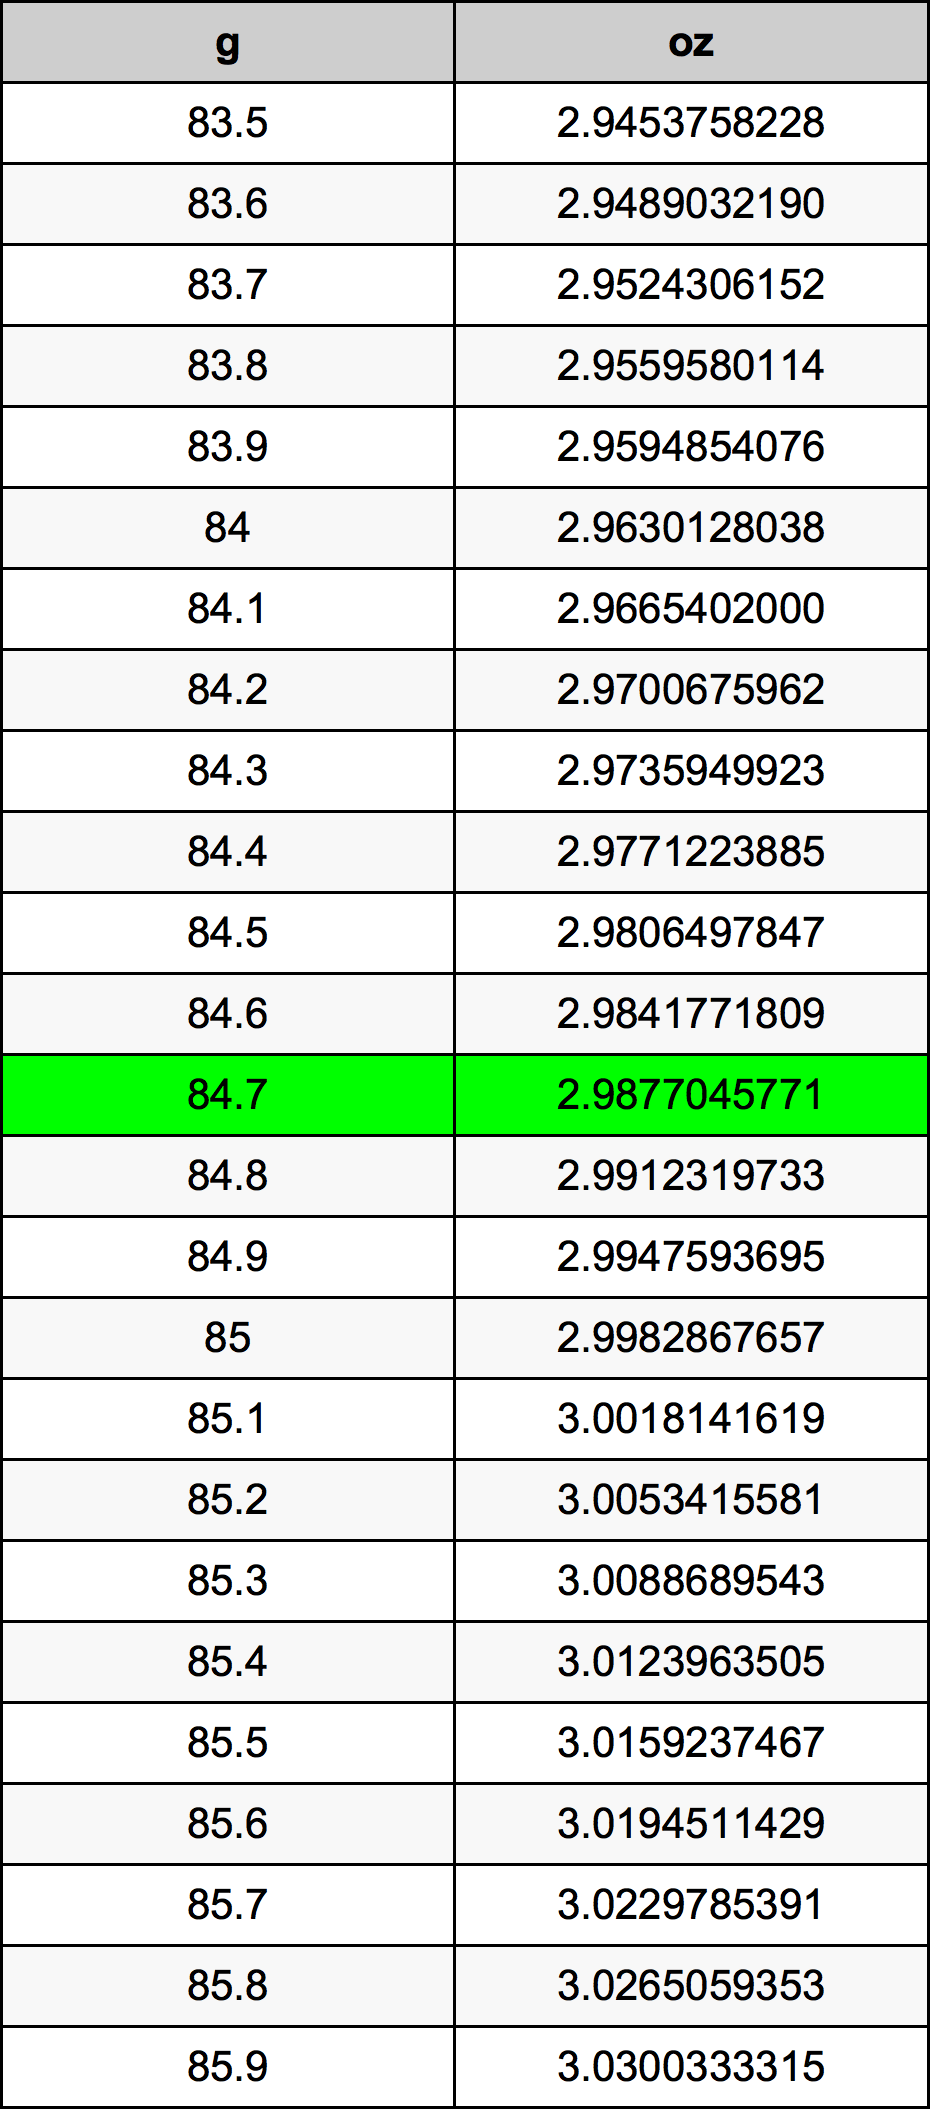 84.7 غرام جدول تحويل